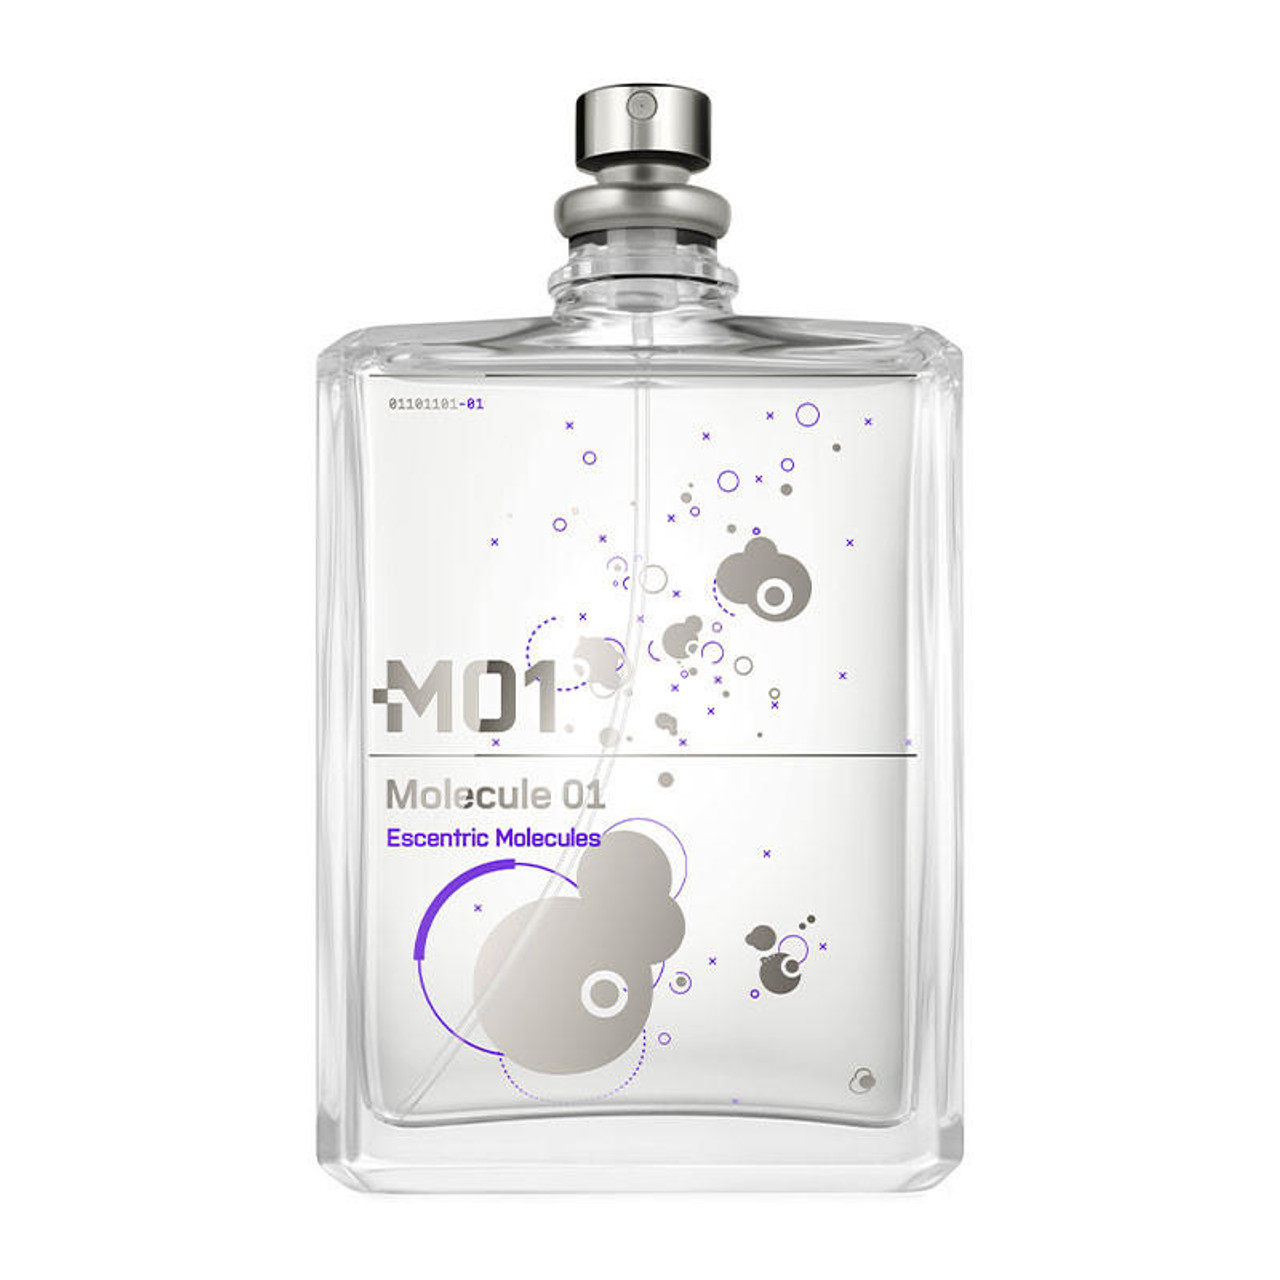 Molecule 01 Eau De Toilette 100 ml - Jolie Profumerie